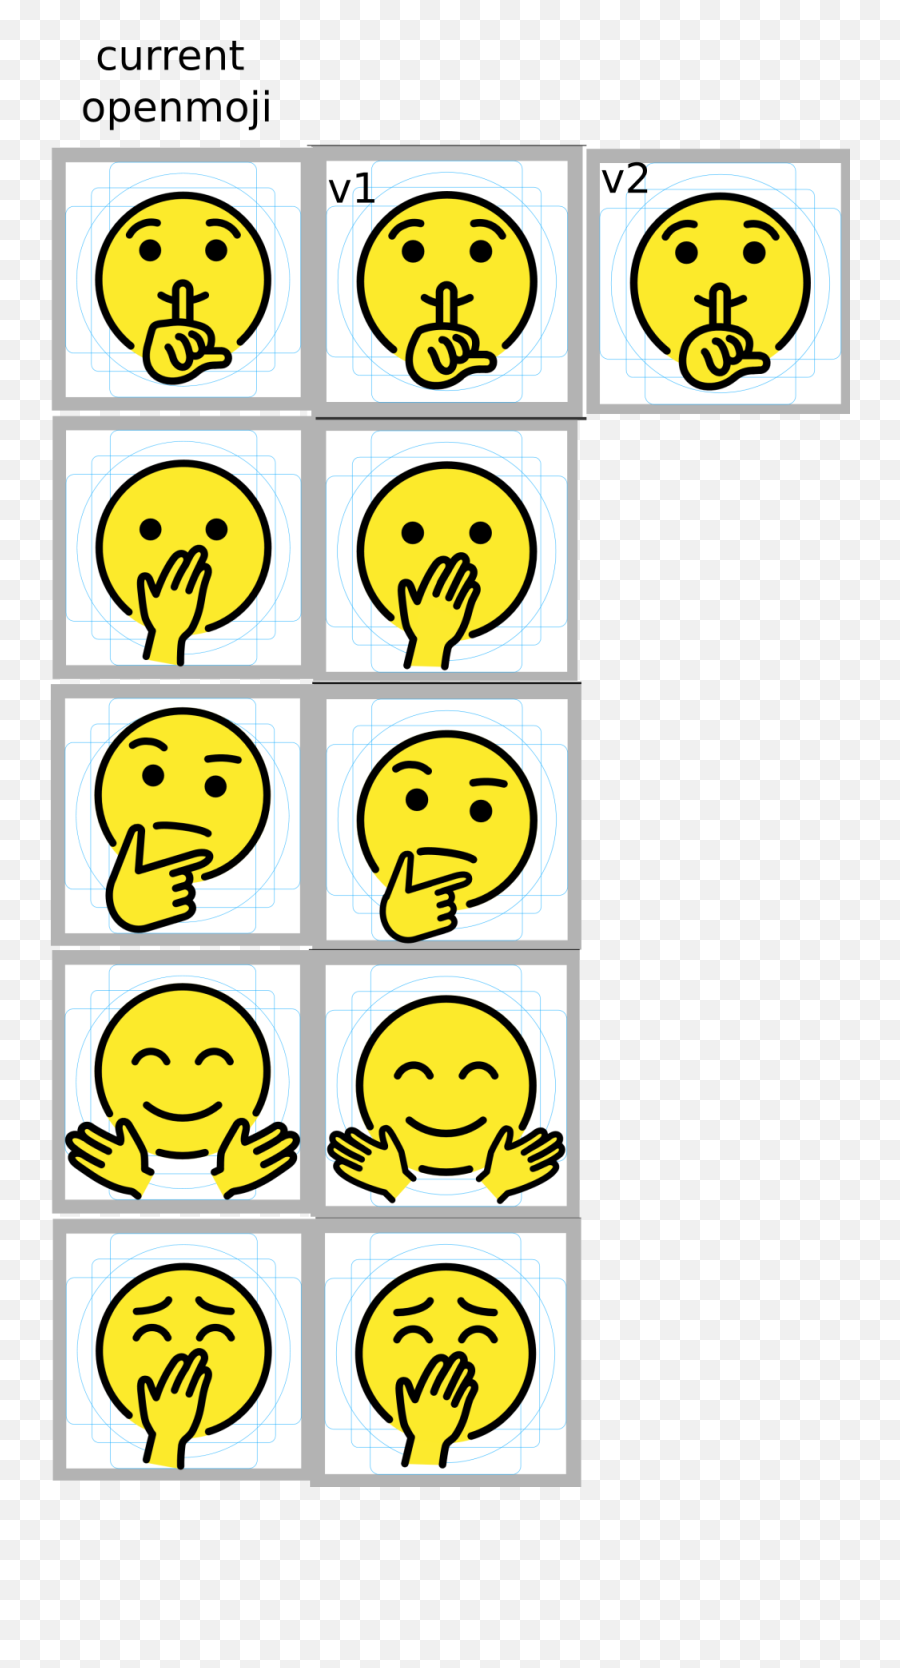 Improving Design Of Emoji Issue 142 Hfg - Gmuendopenmoji Happy Png,Raccoon Emoji Icon